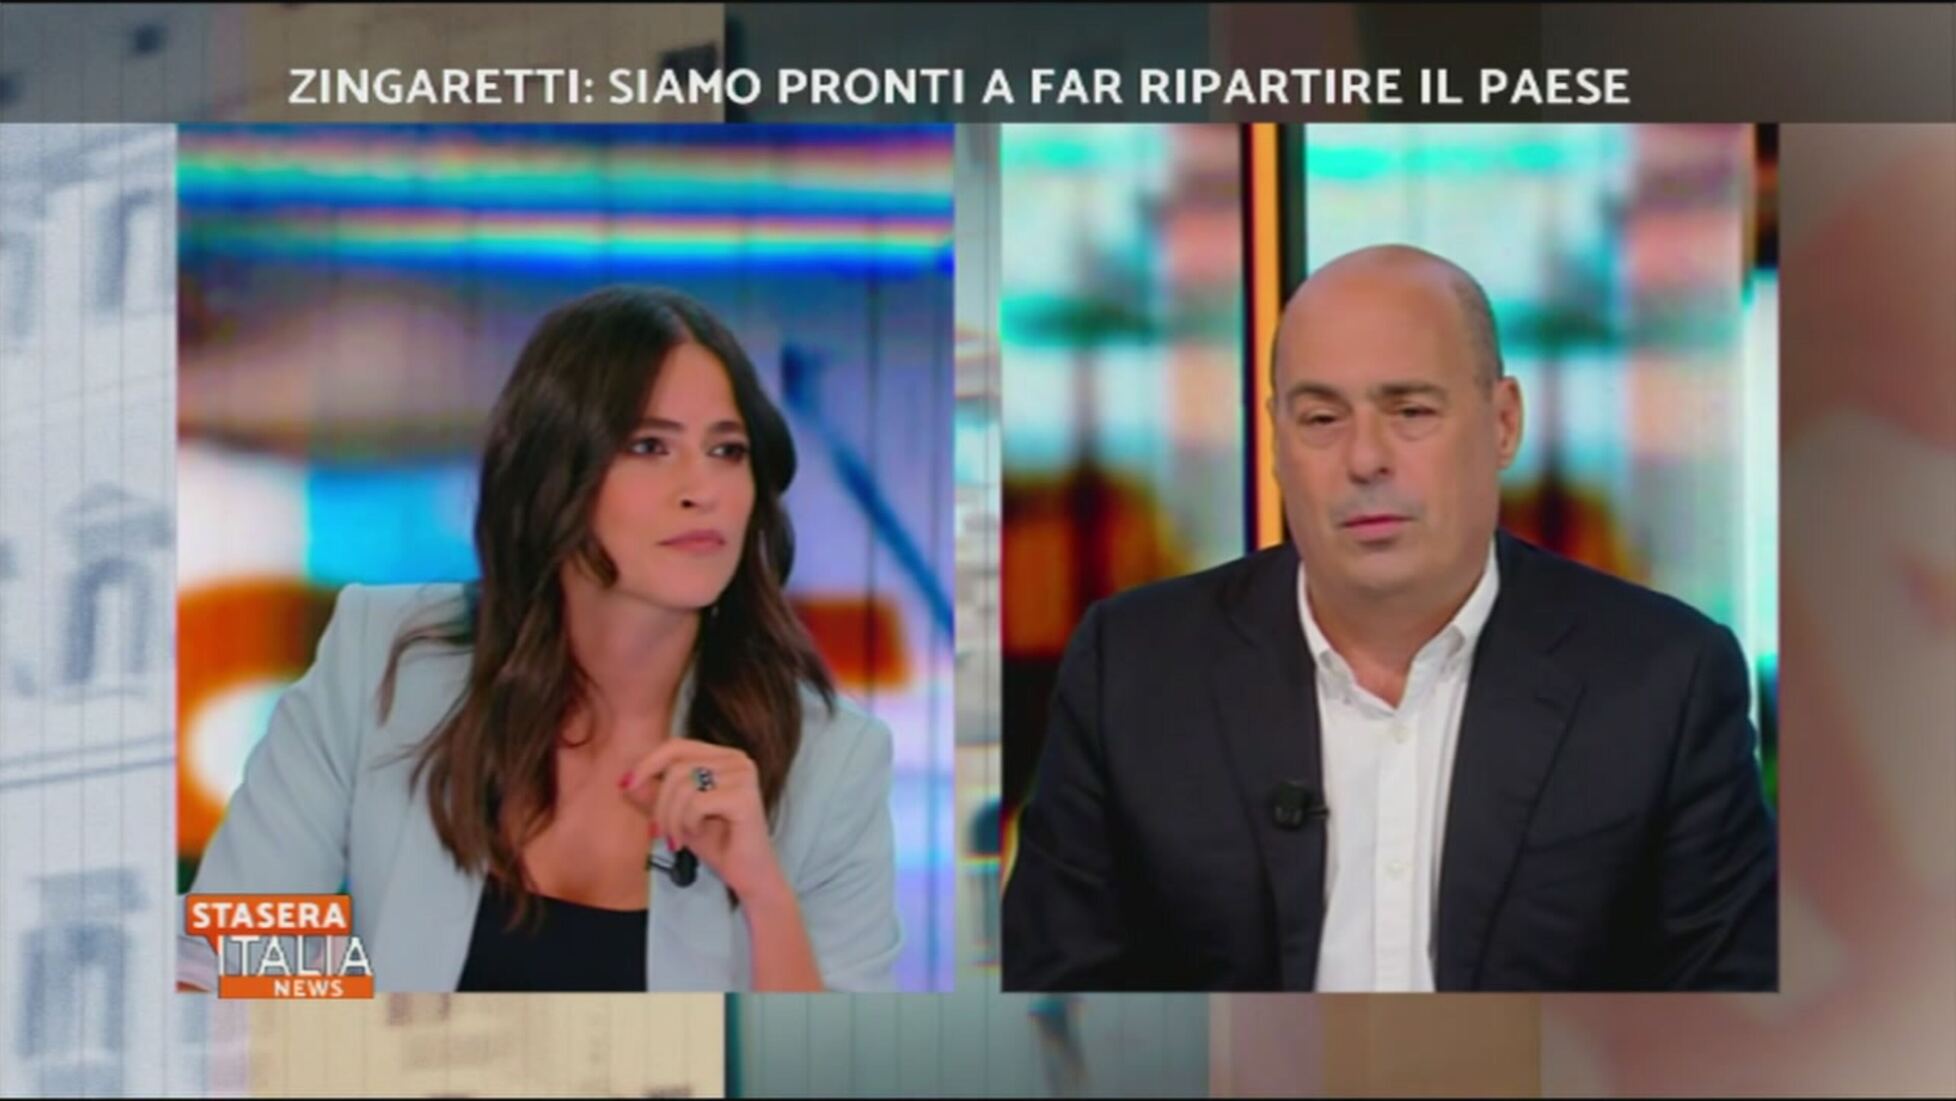 Stasera Italia news Zingaretti